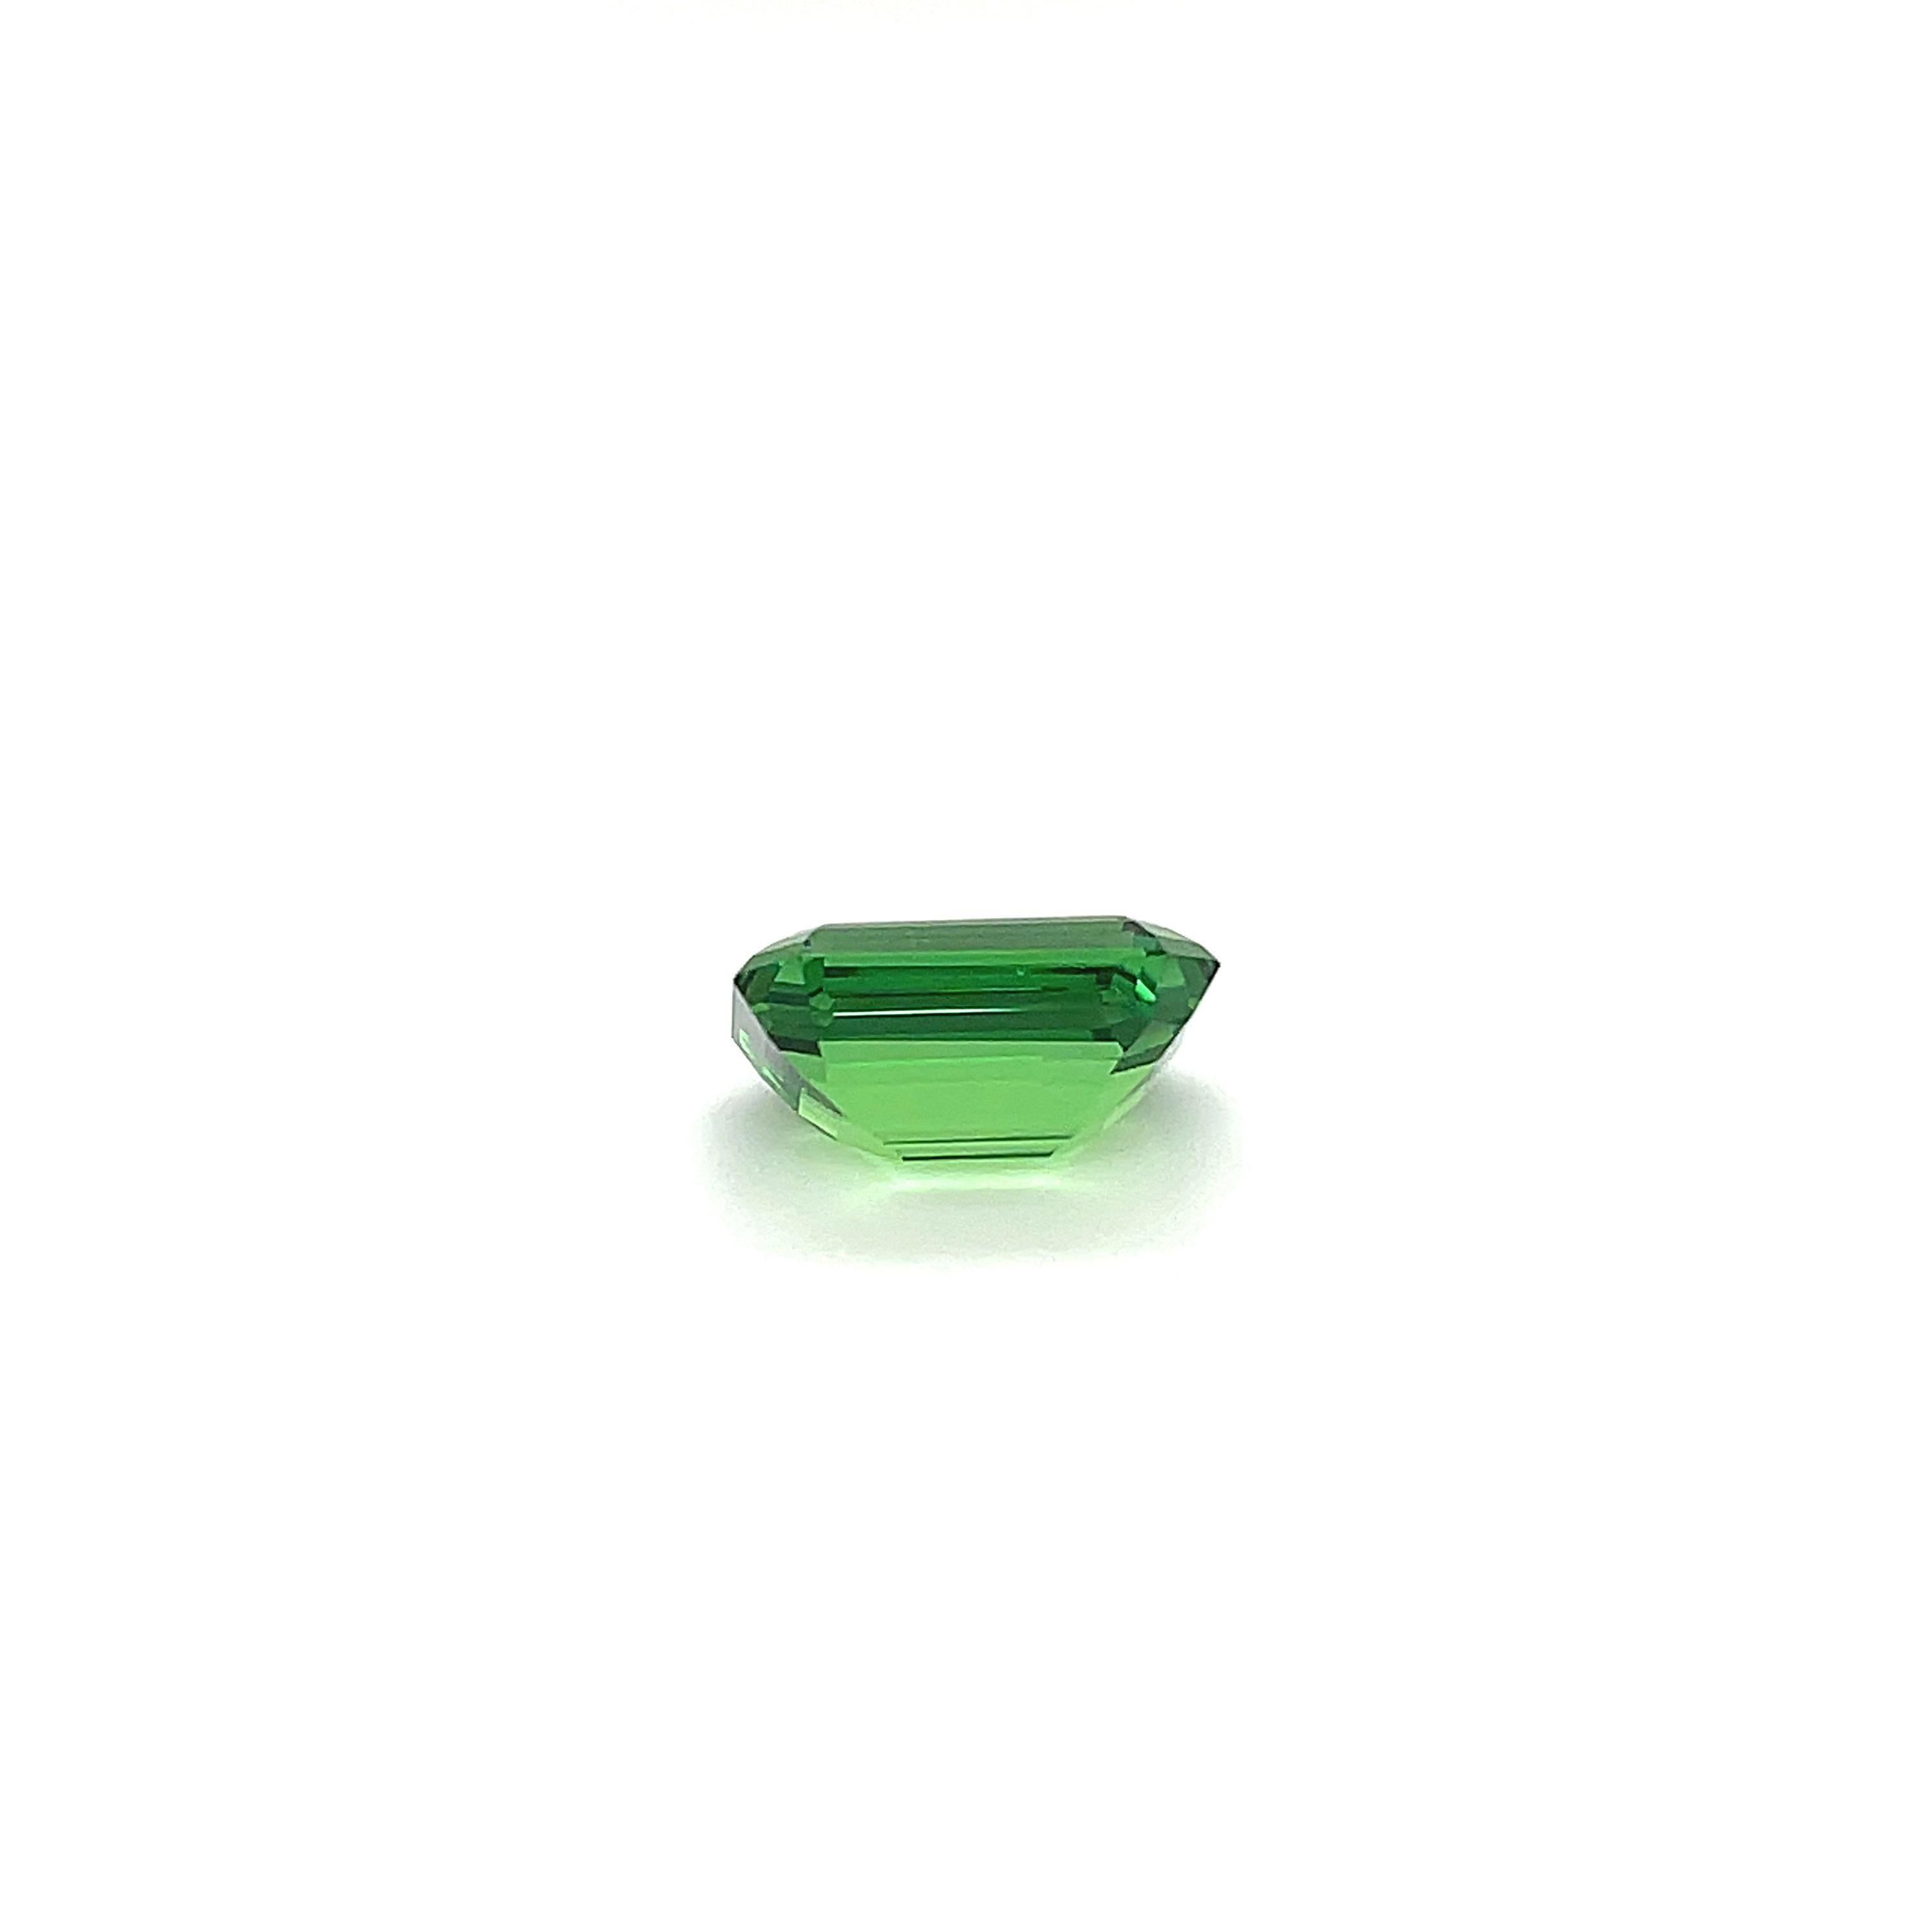 Emerald Cut Tsavorite 8.32 Carat Loose Gemstone For Sale